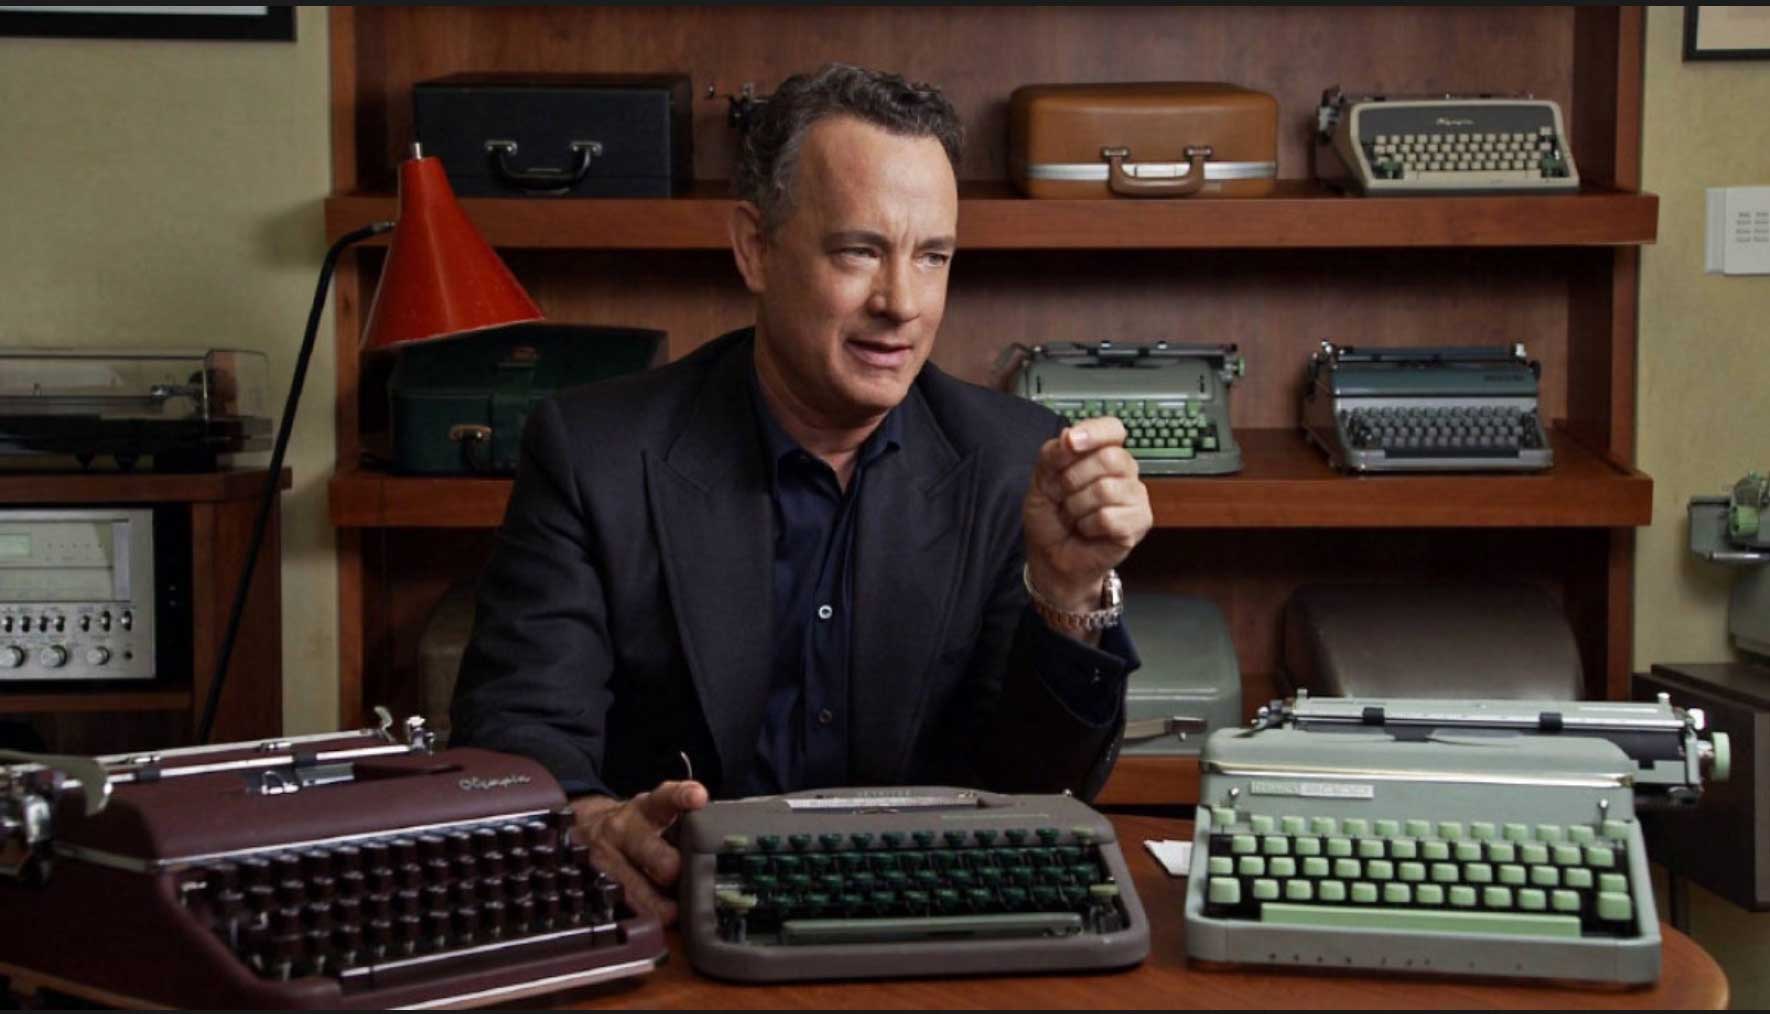 typewriter collection of Tom Hanks